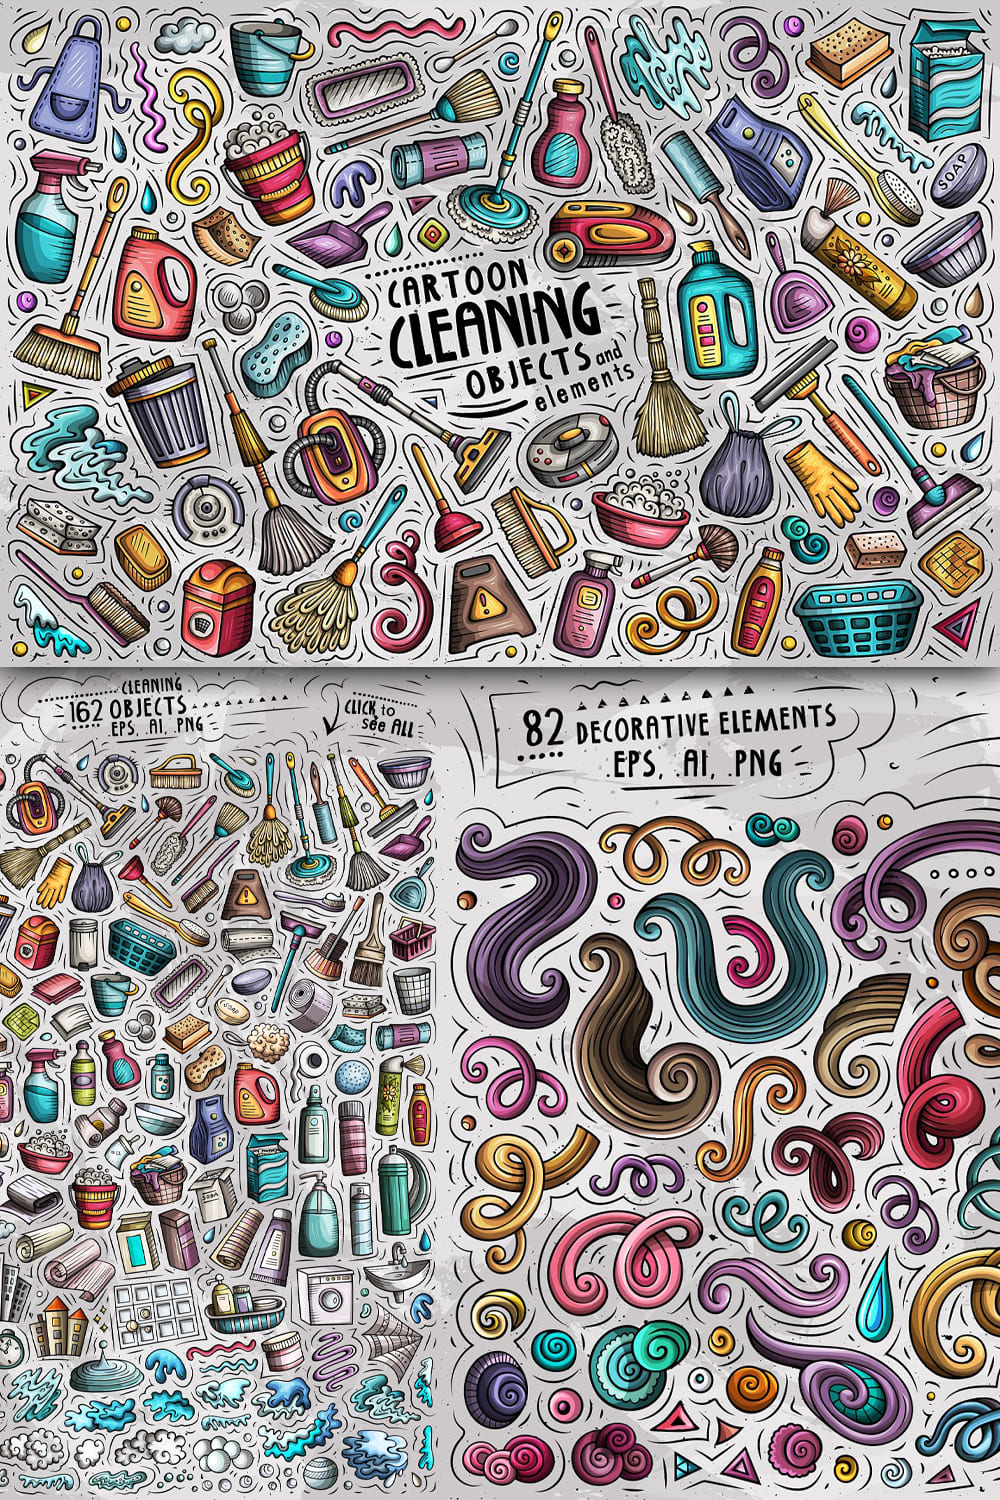 Cleaning Cartoon Objects Set Pinterest 1000 1500.